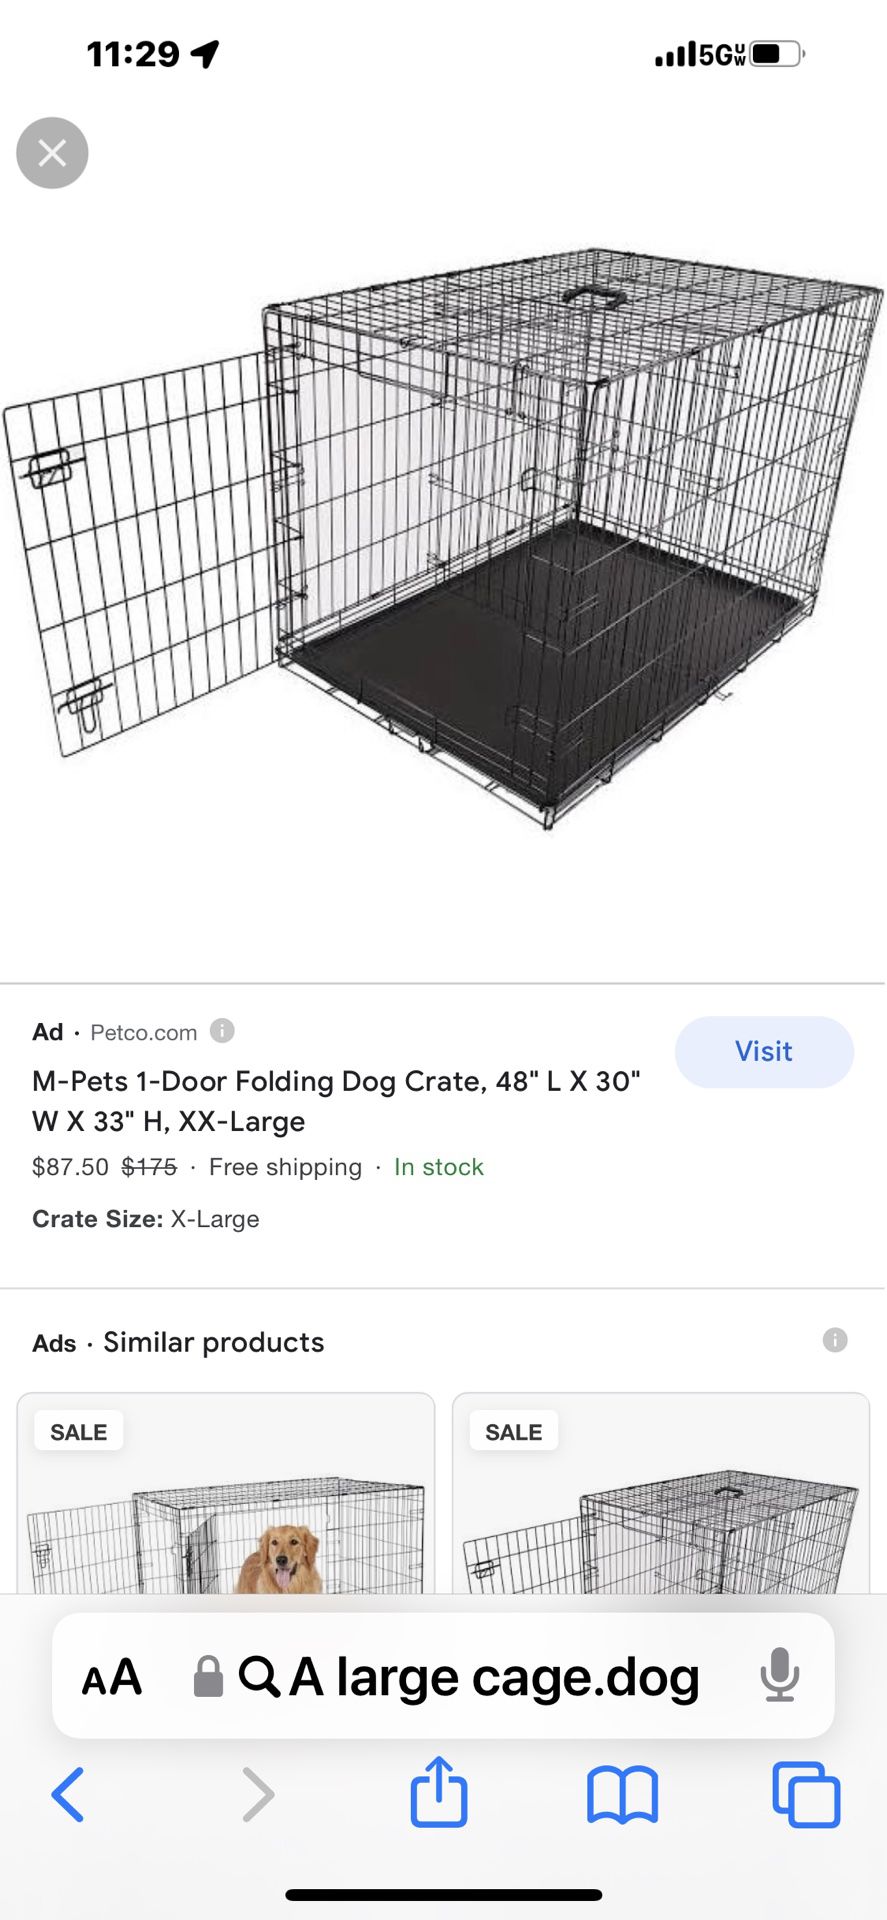 A large dog cage